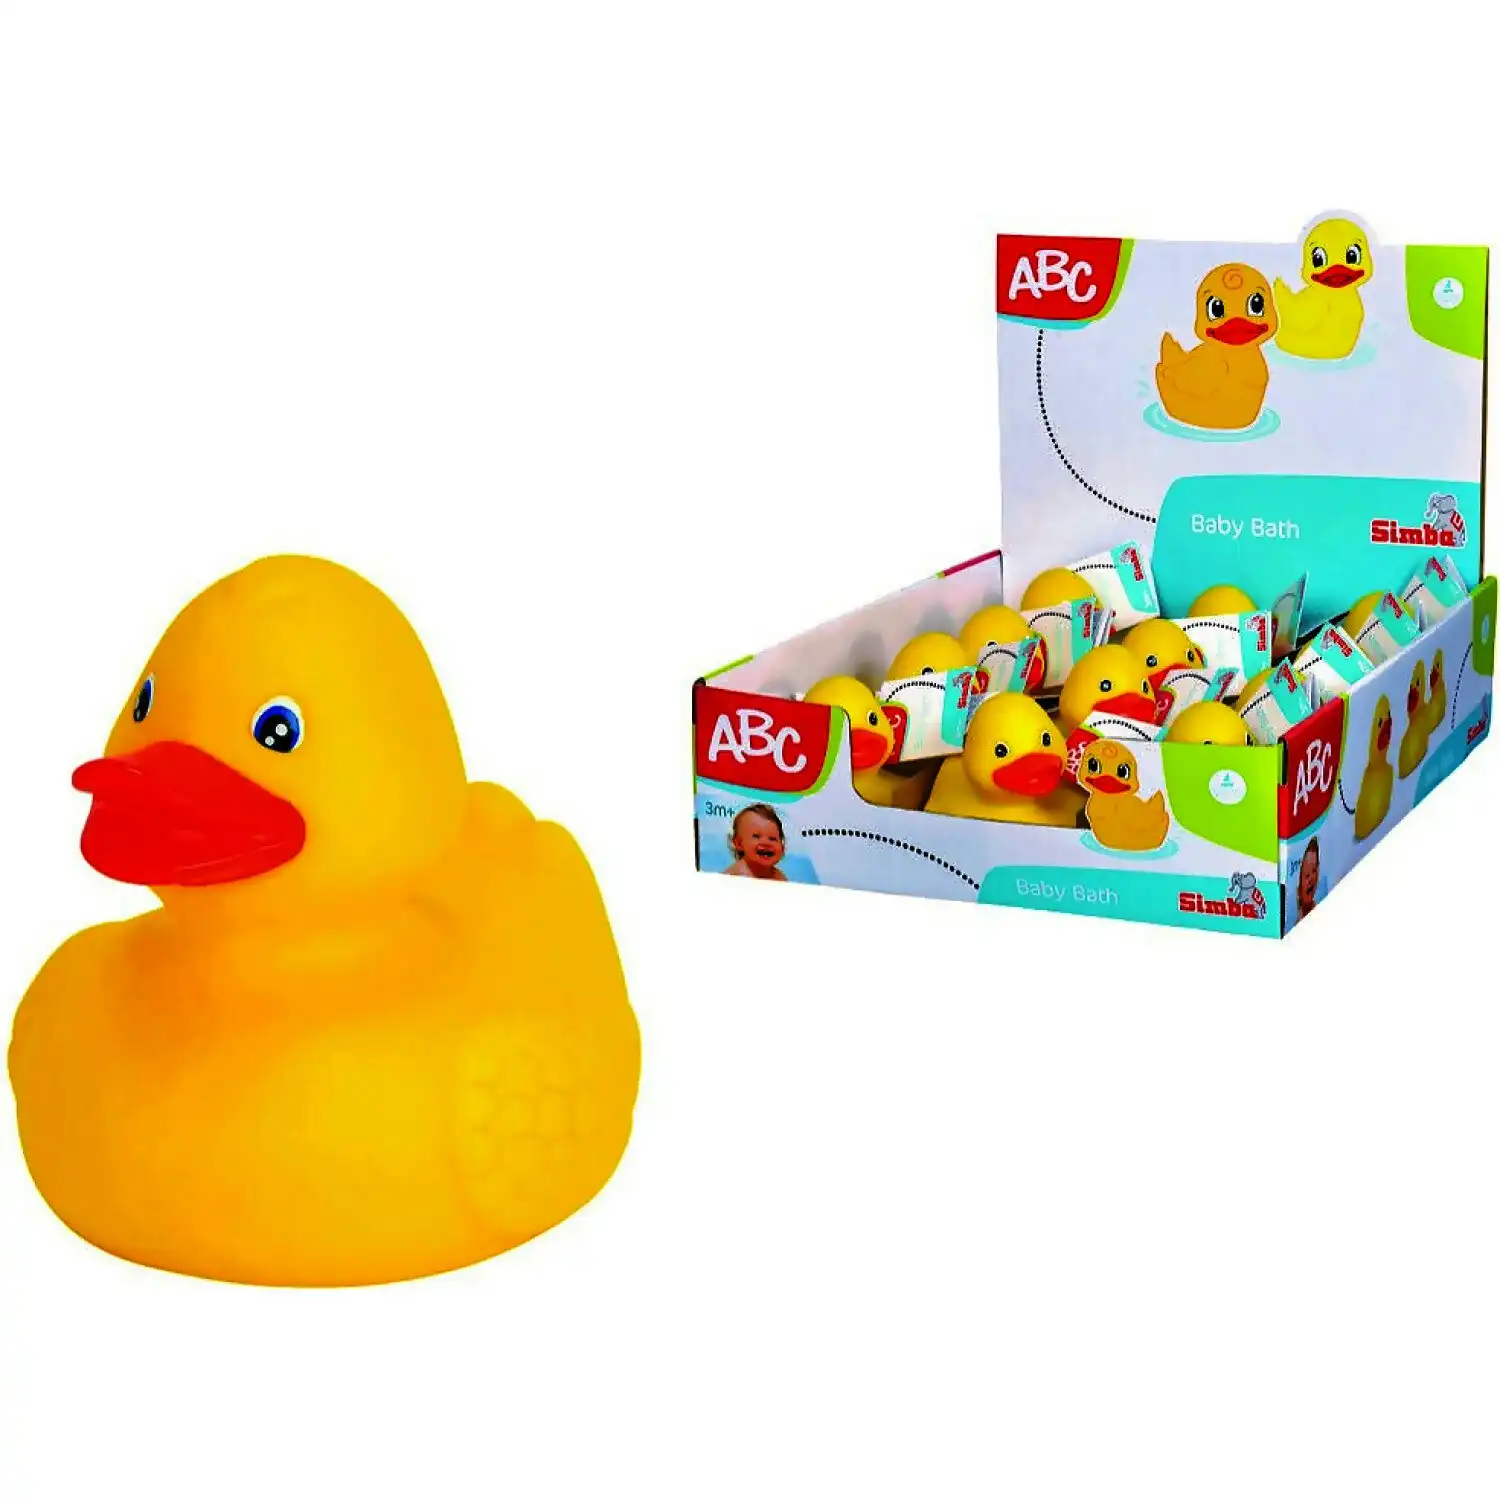 Simba Toys - ABC Rubber Duck